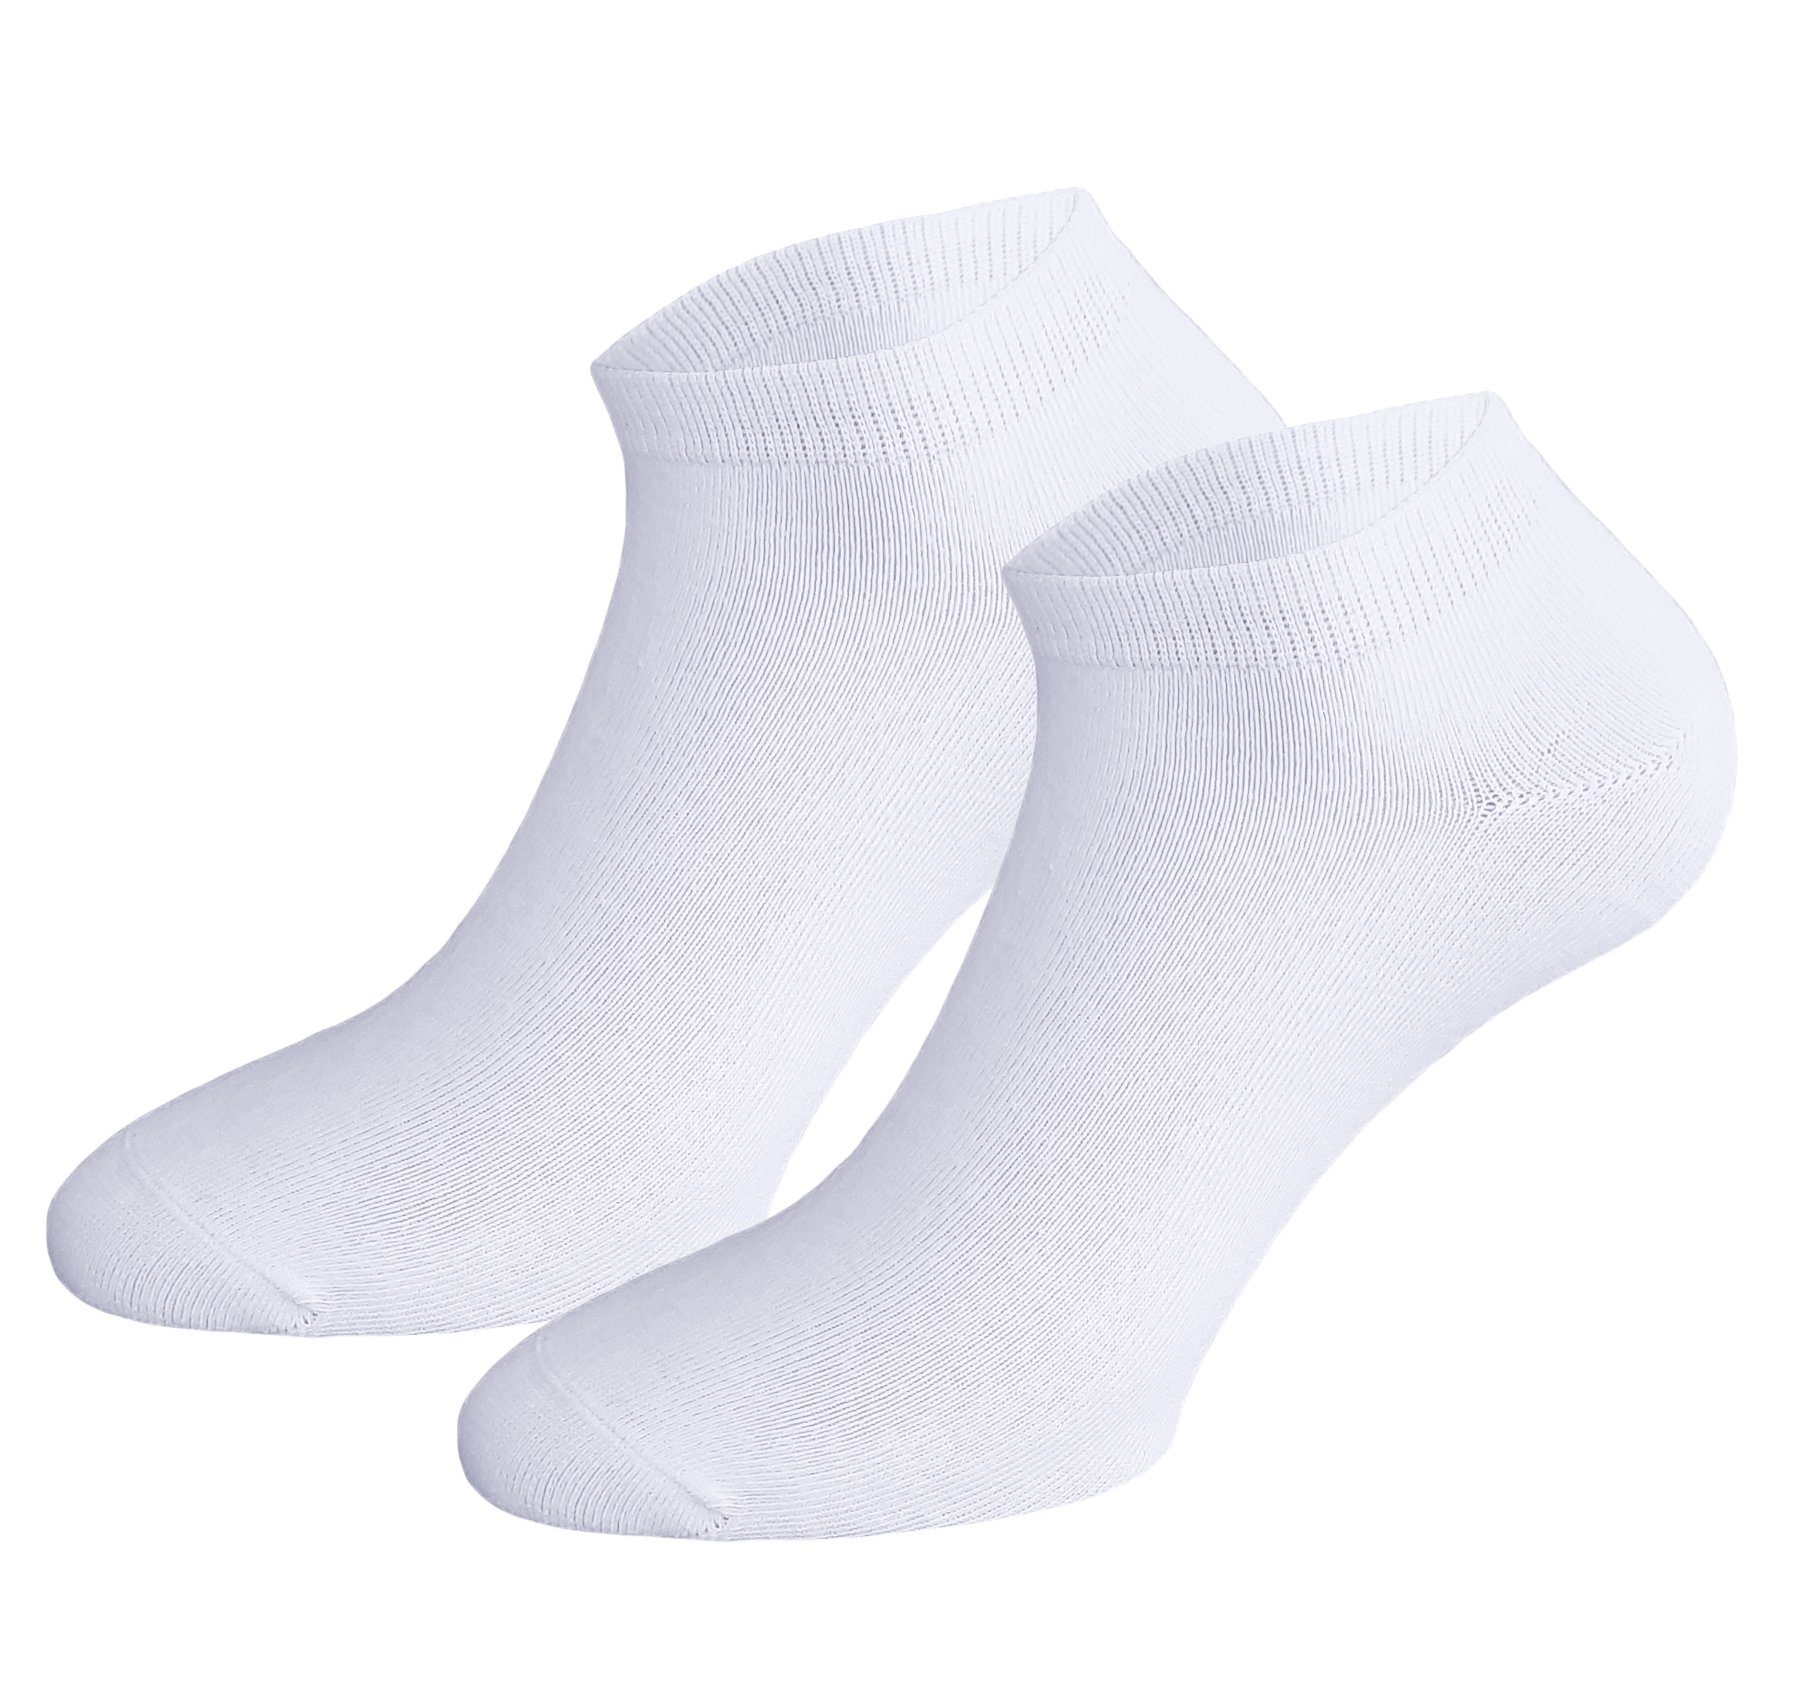 (10 Sneakersocken (sehr kurze flach) Paar) Damen für leichte Basic Sockenhimmel Farben Naht Sommersocken Sportsocken Weiß maschinengekettelte Socken in